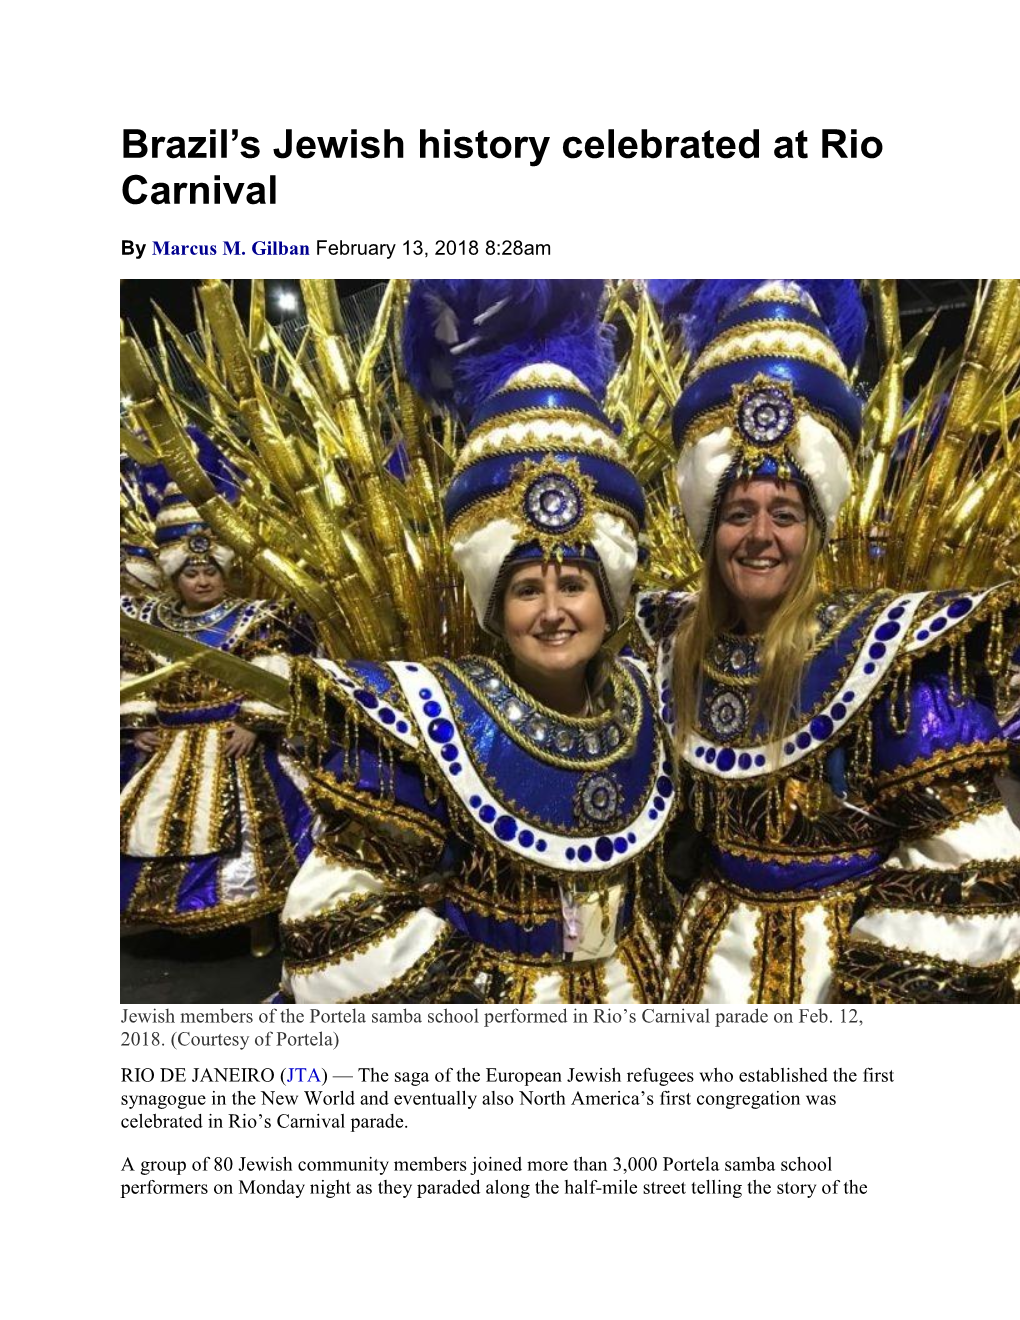 Brazil's Jewish History Celebrated at Rio Carnival